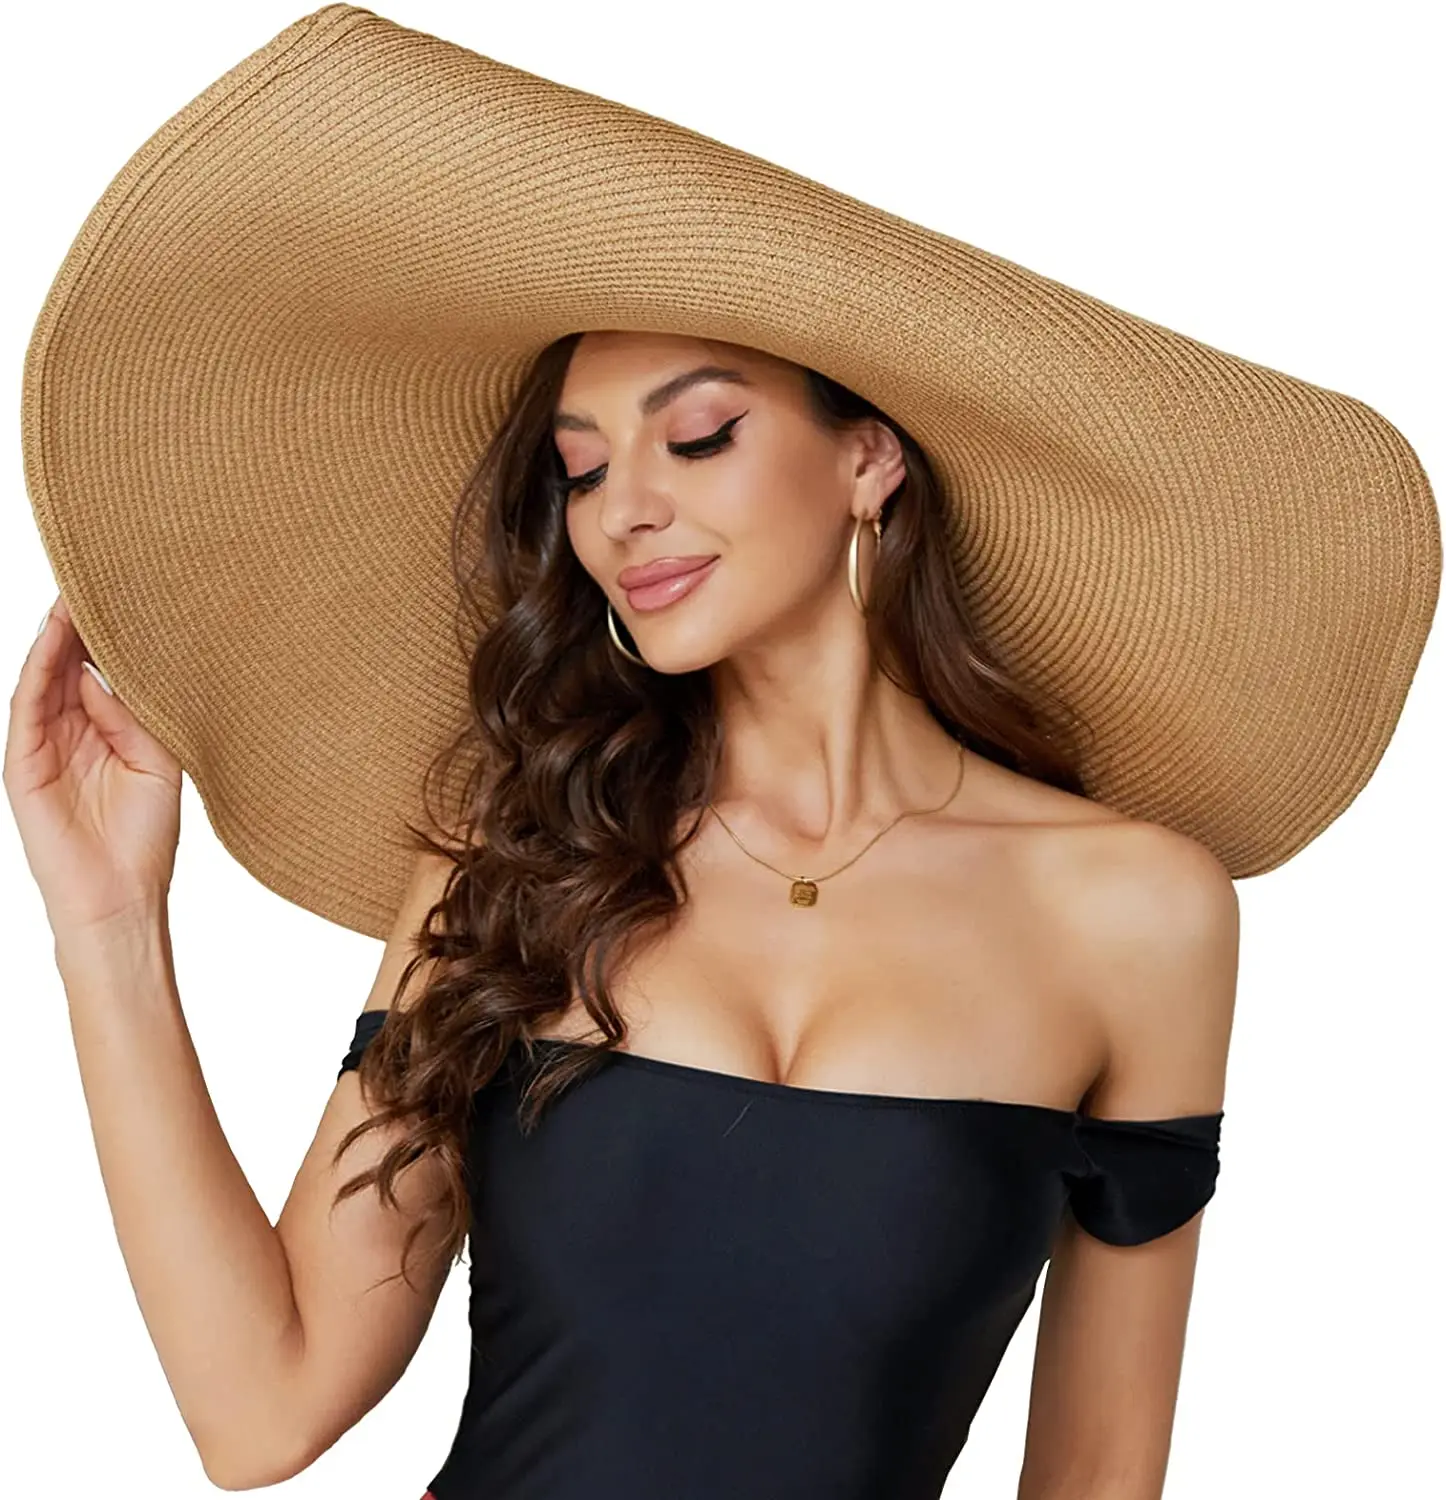 

Summer Oversized Beach Straw Hat for Women Large Wide Brim Hats Handmade Roll Up Floppy Sun Hat